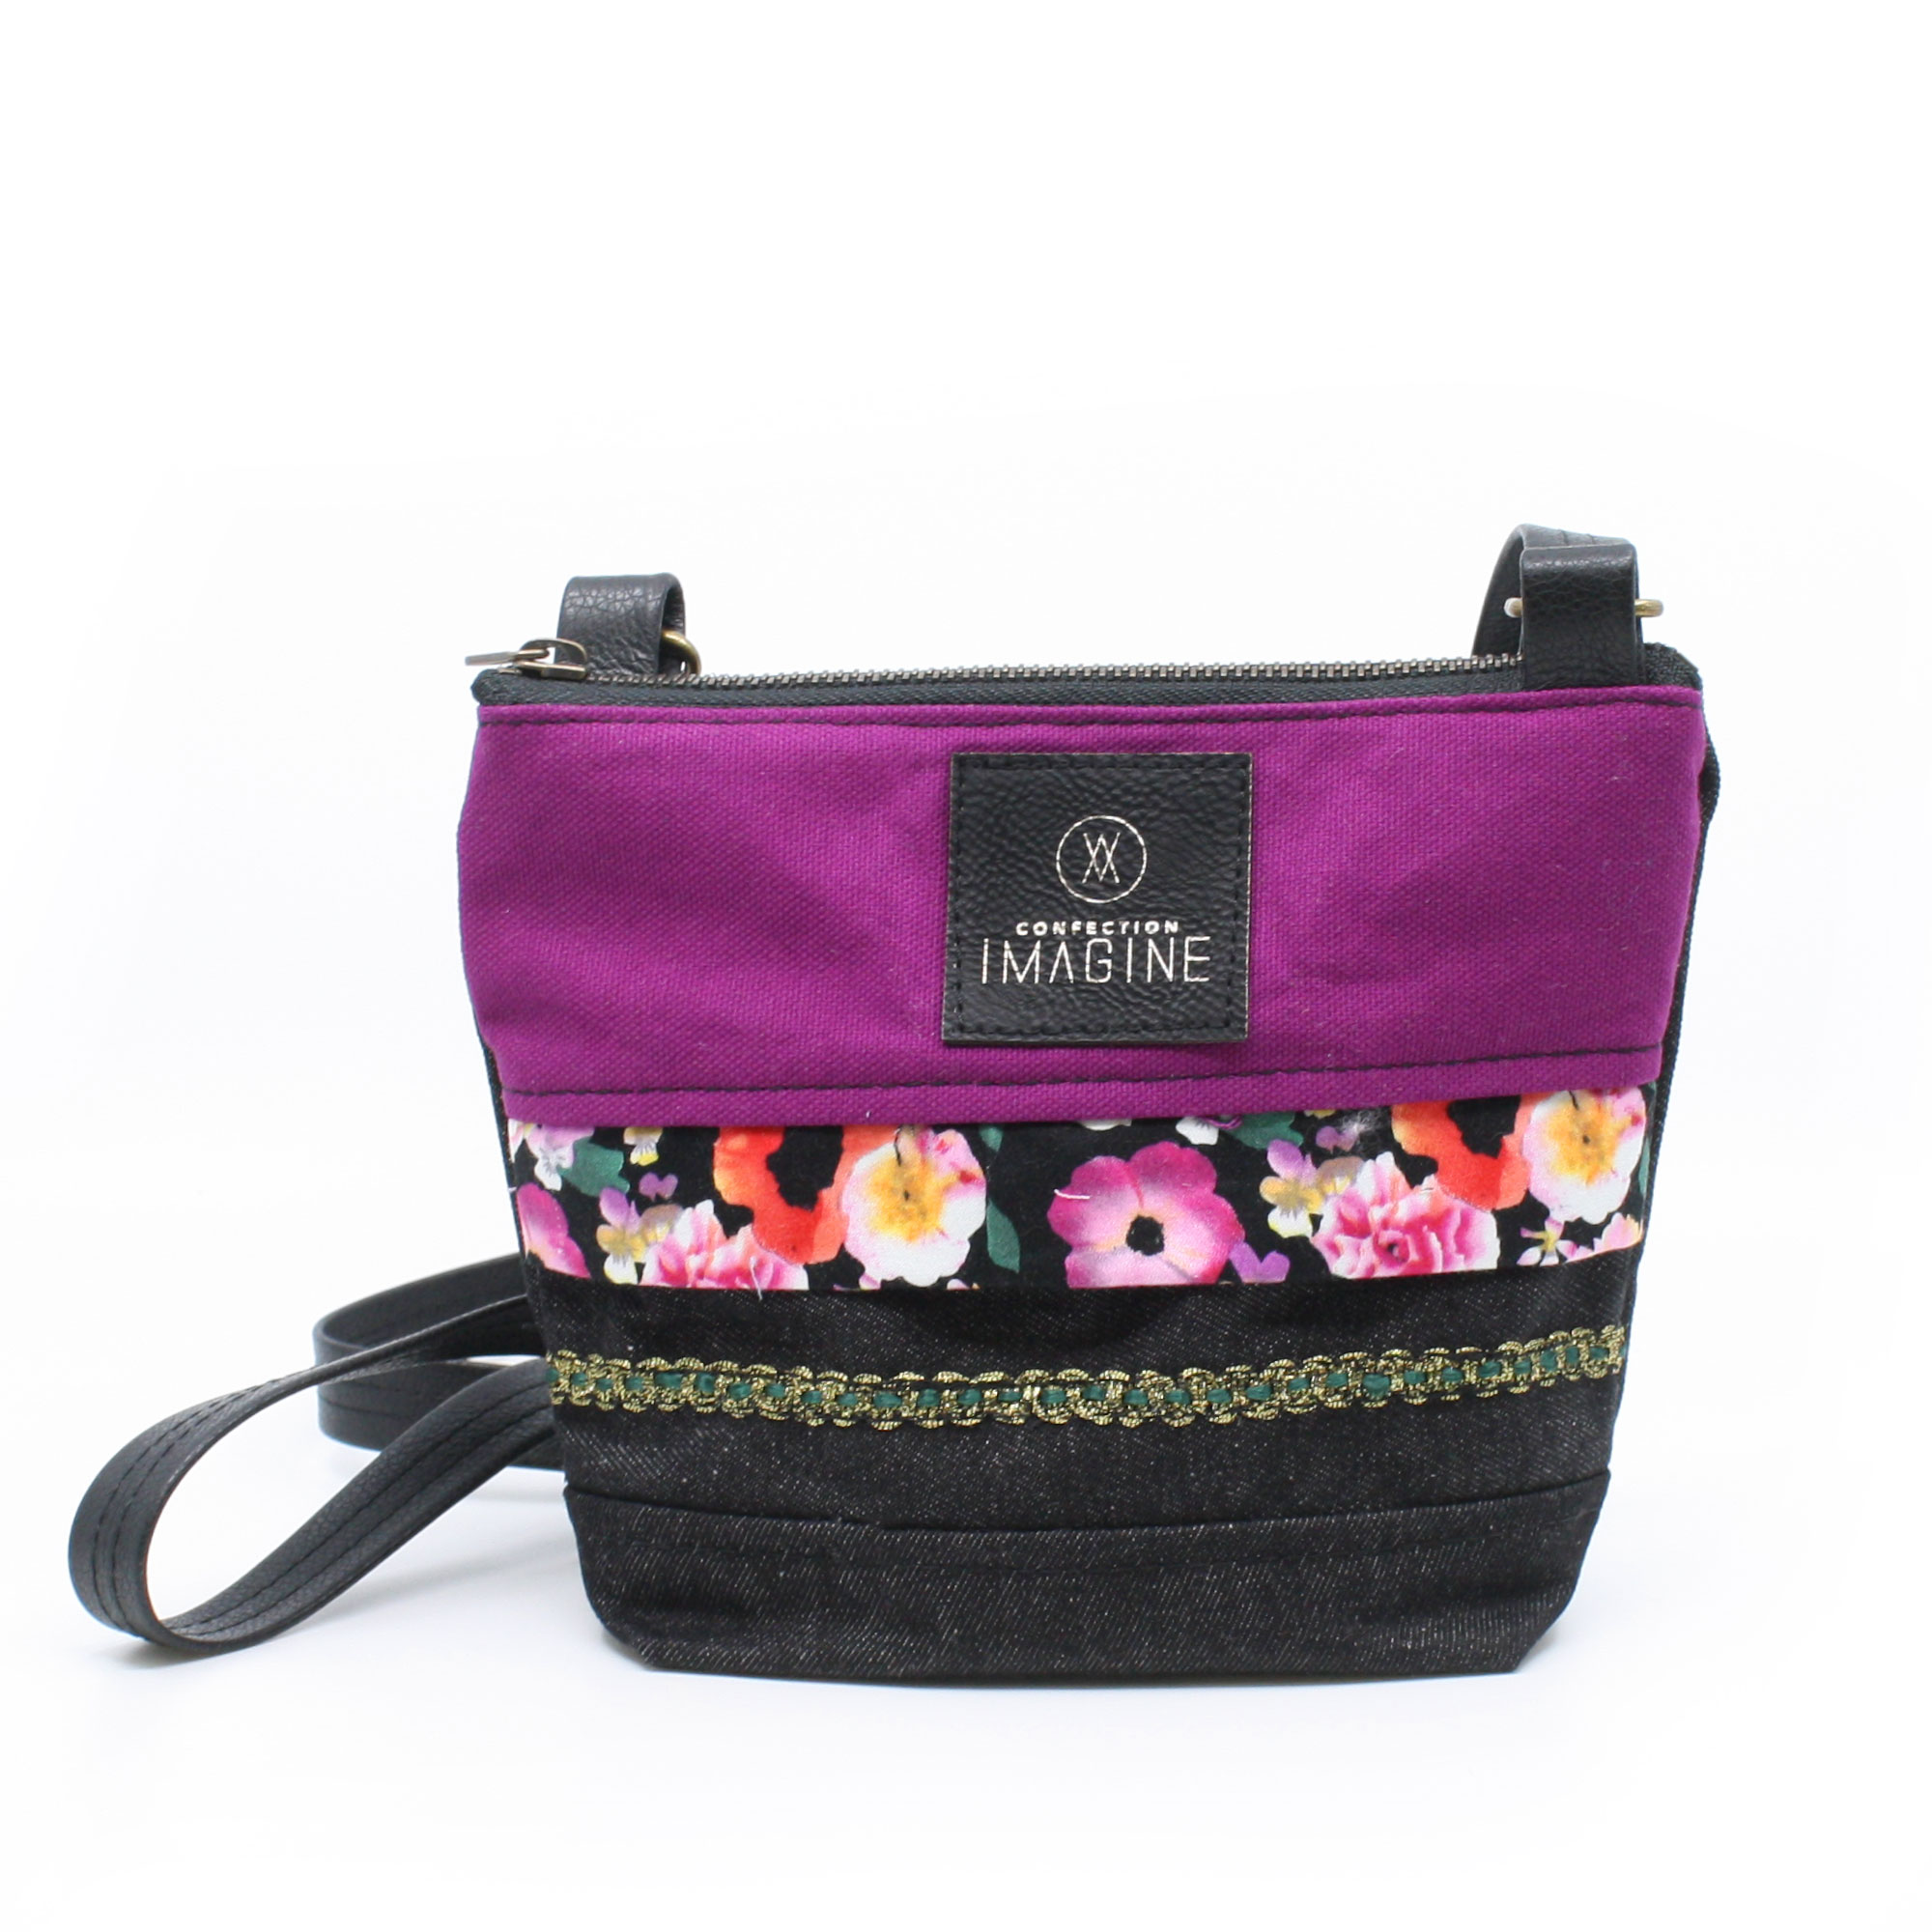 La Mini | Petit sac à main fleuri et violet